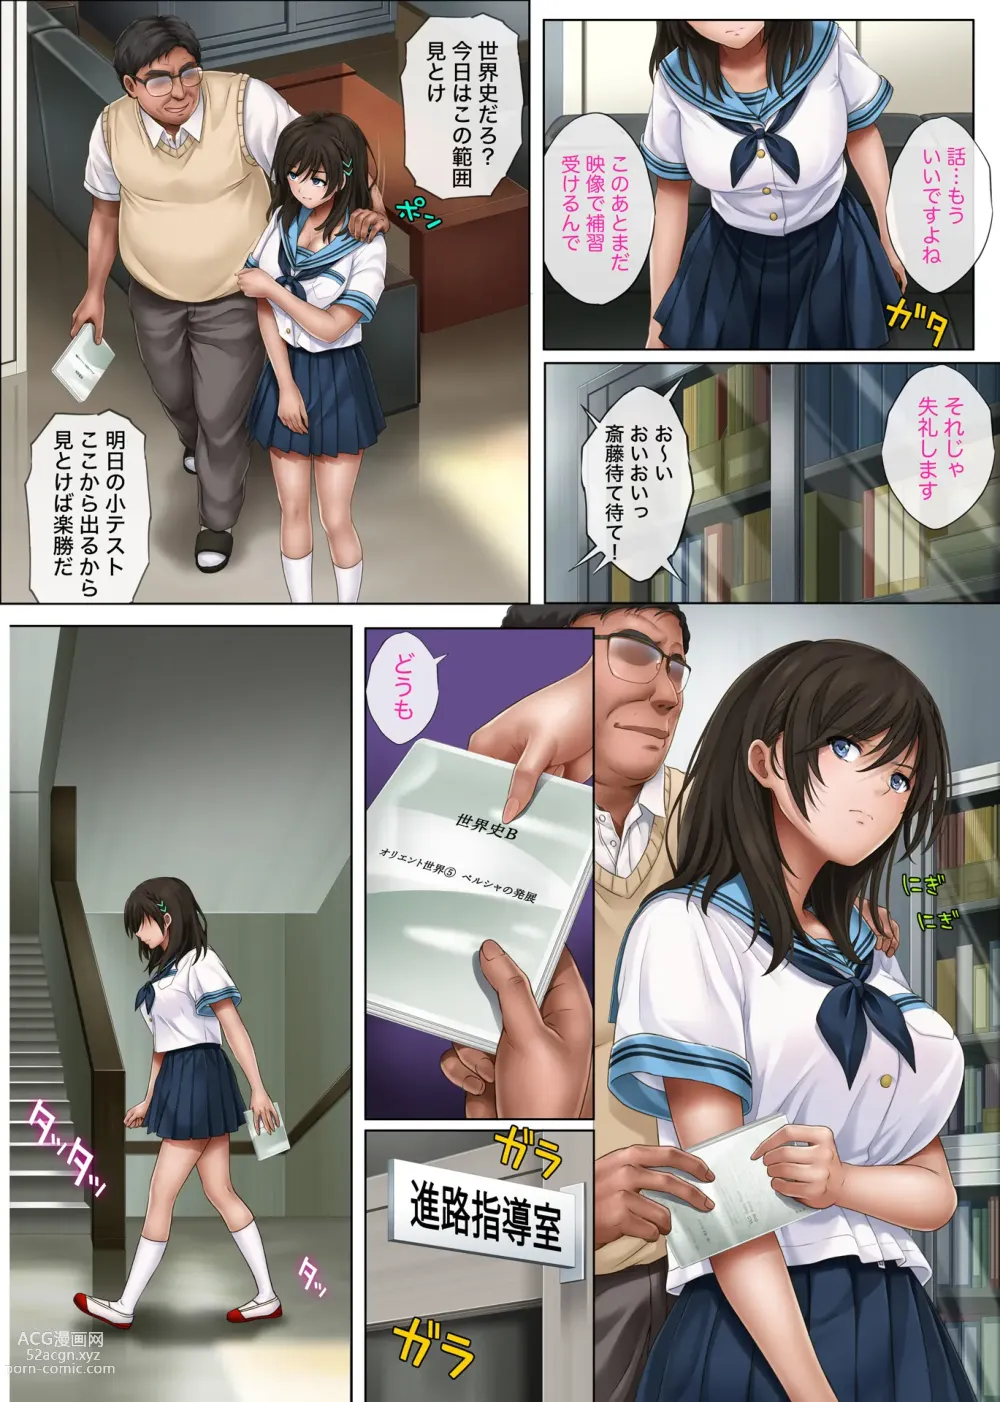 Page 7 of doujinshi yumeka ututuka